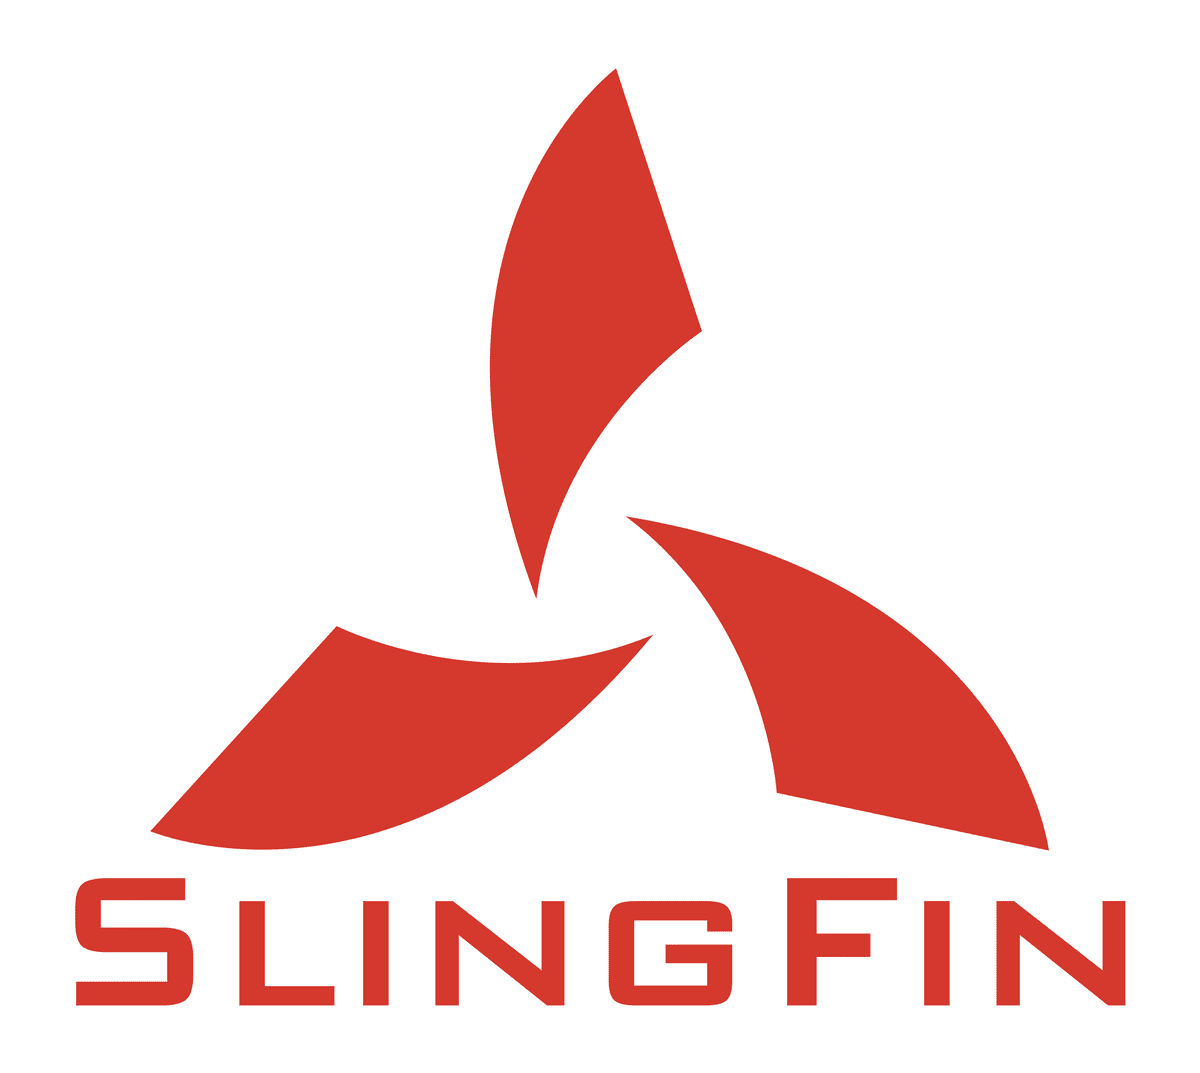 www.slingfin.com